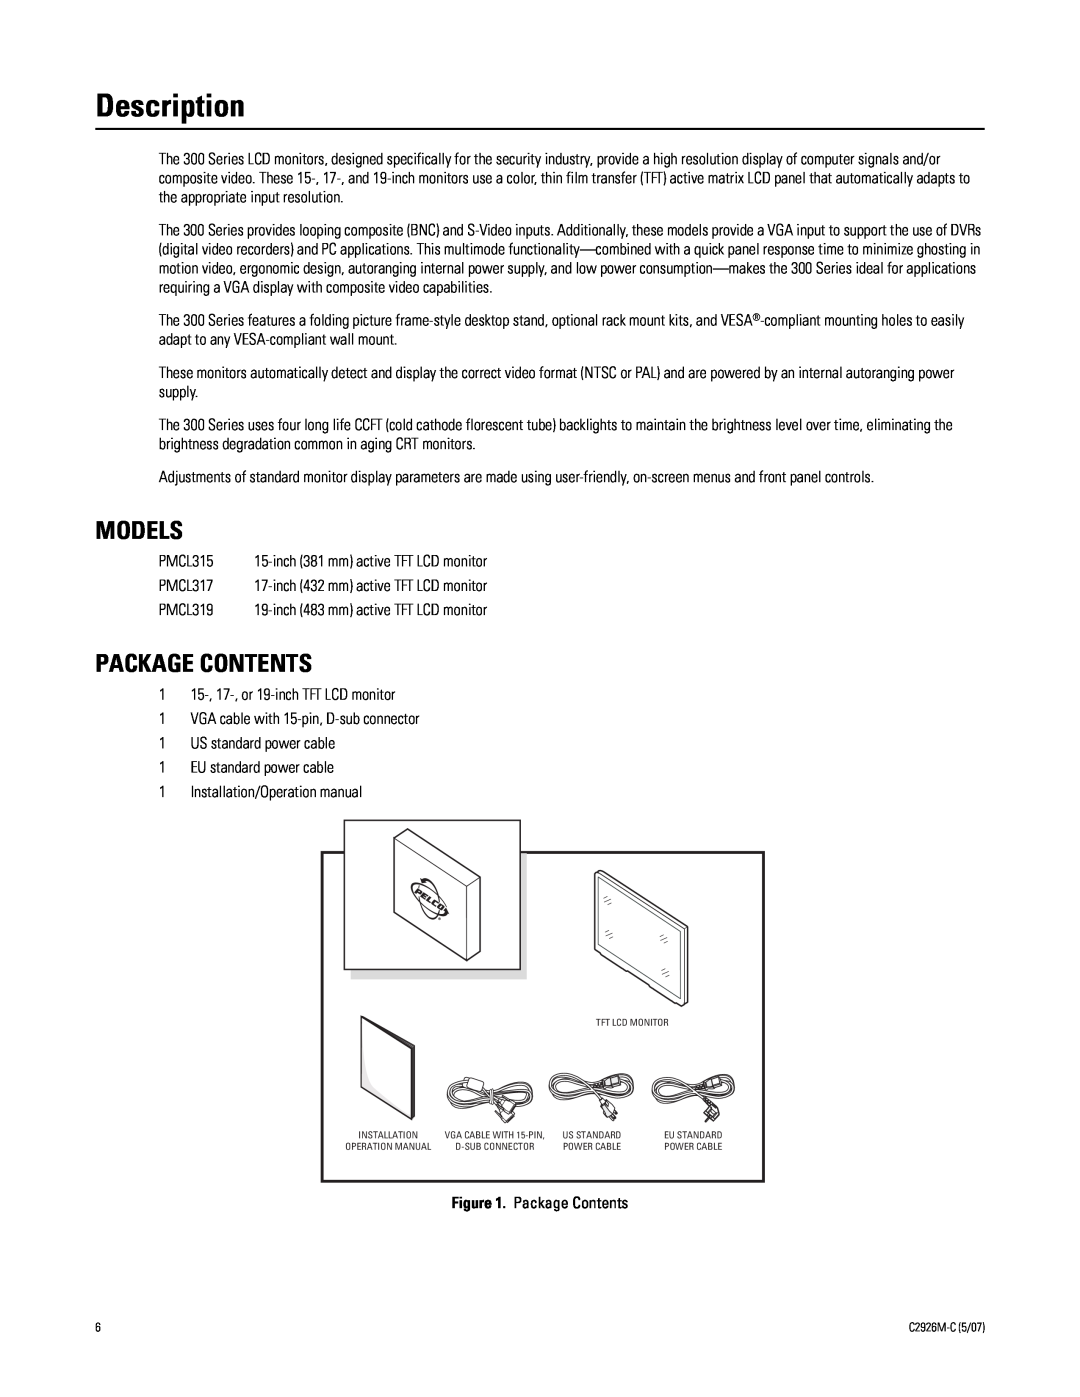 Pelco 300 manual Description, Models, Package Contents 